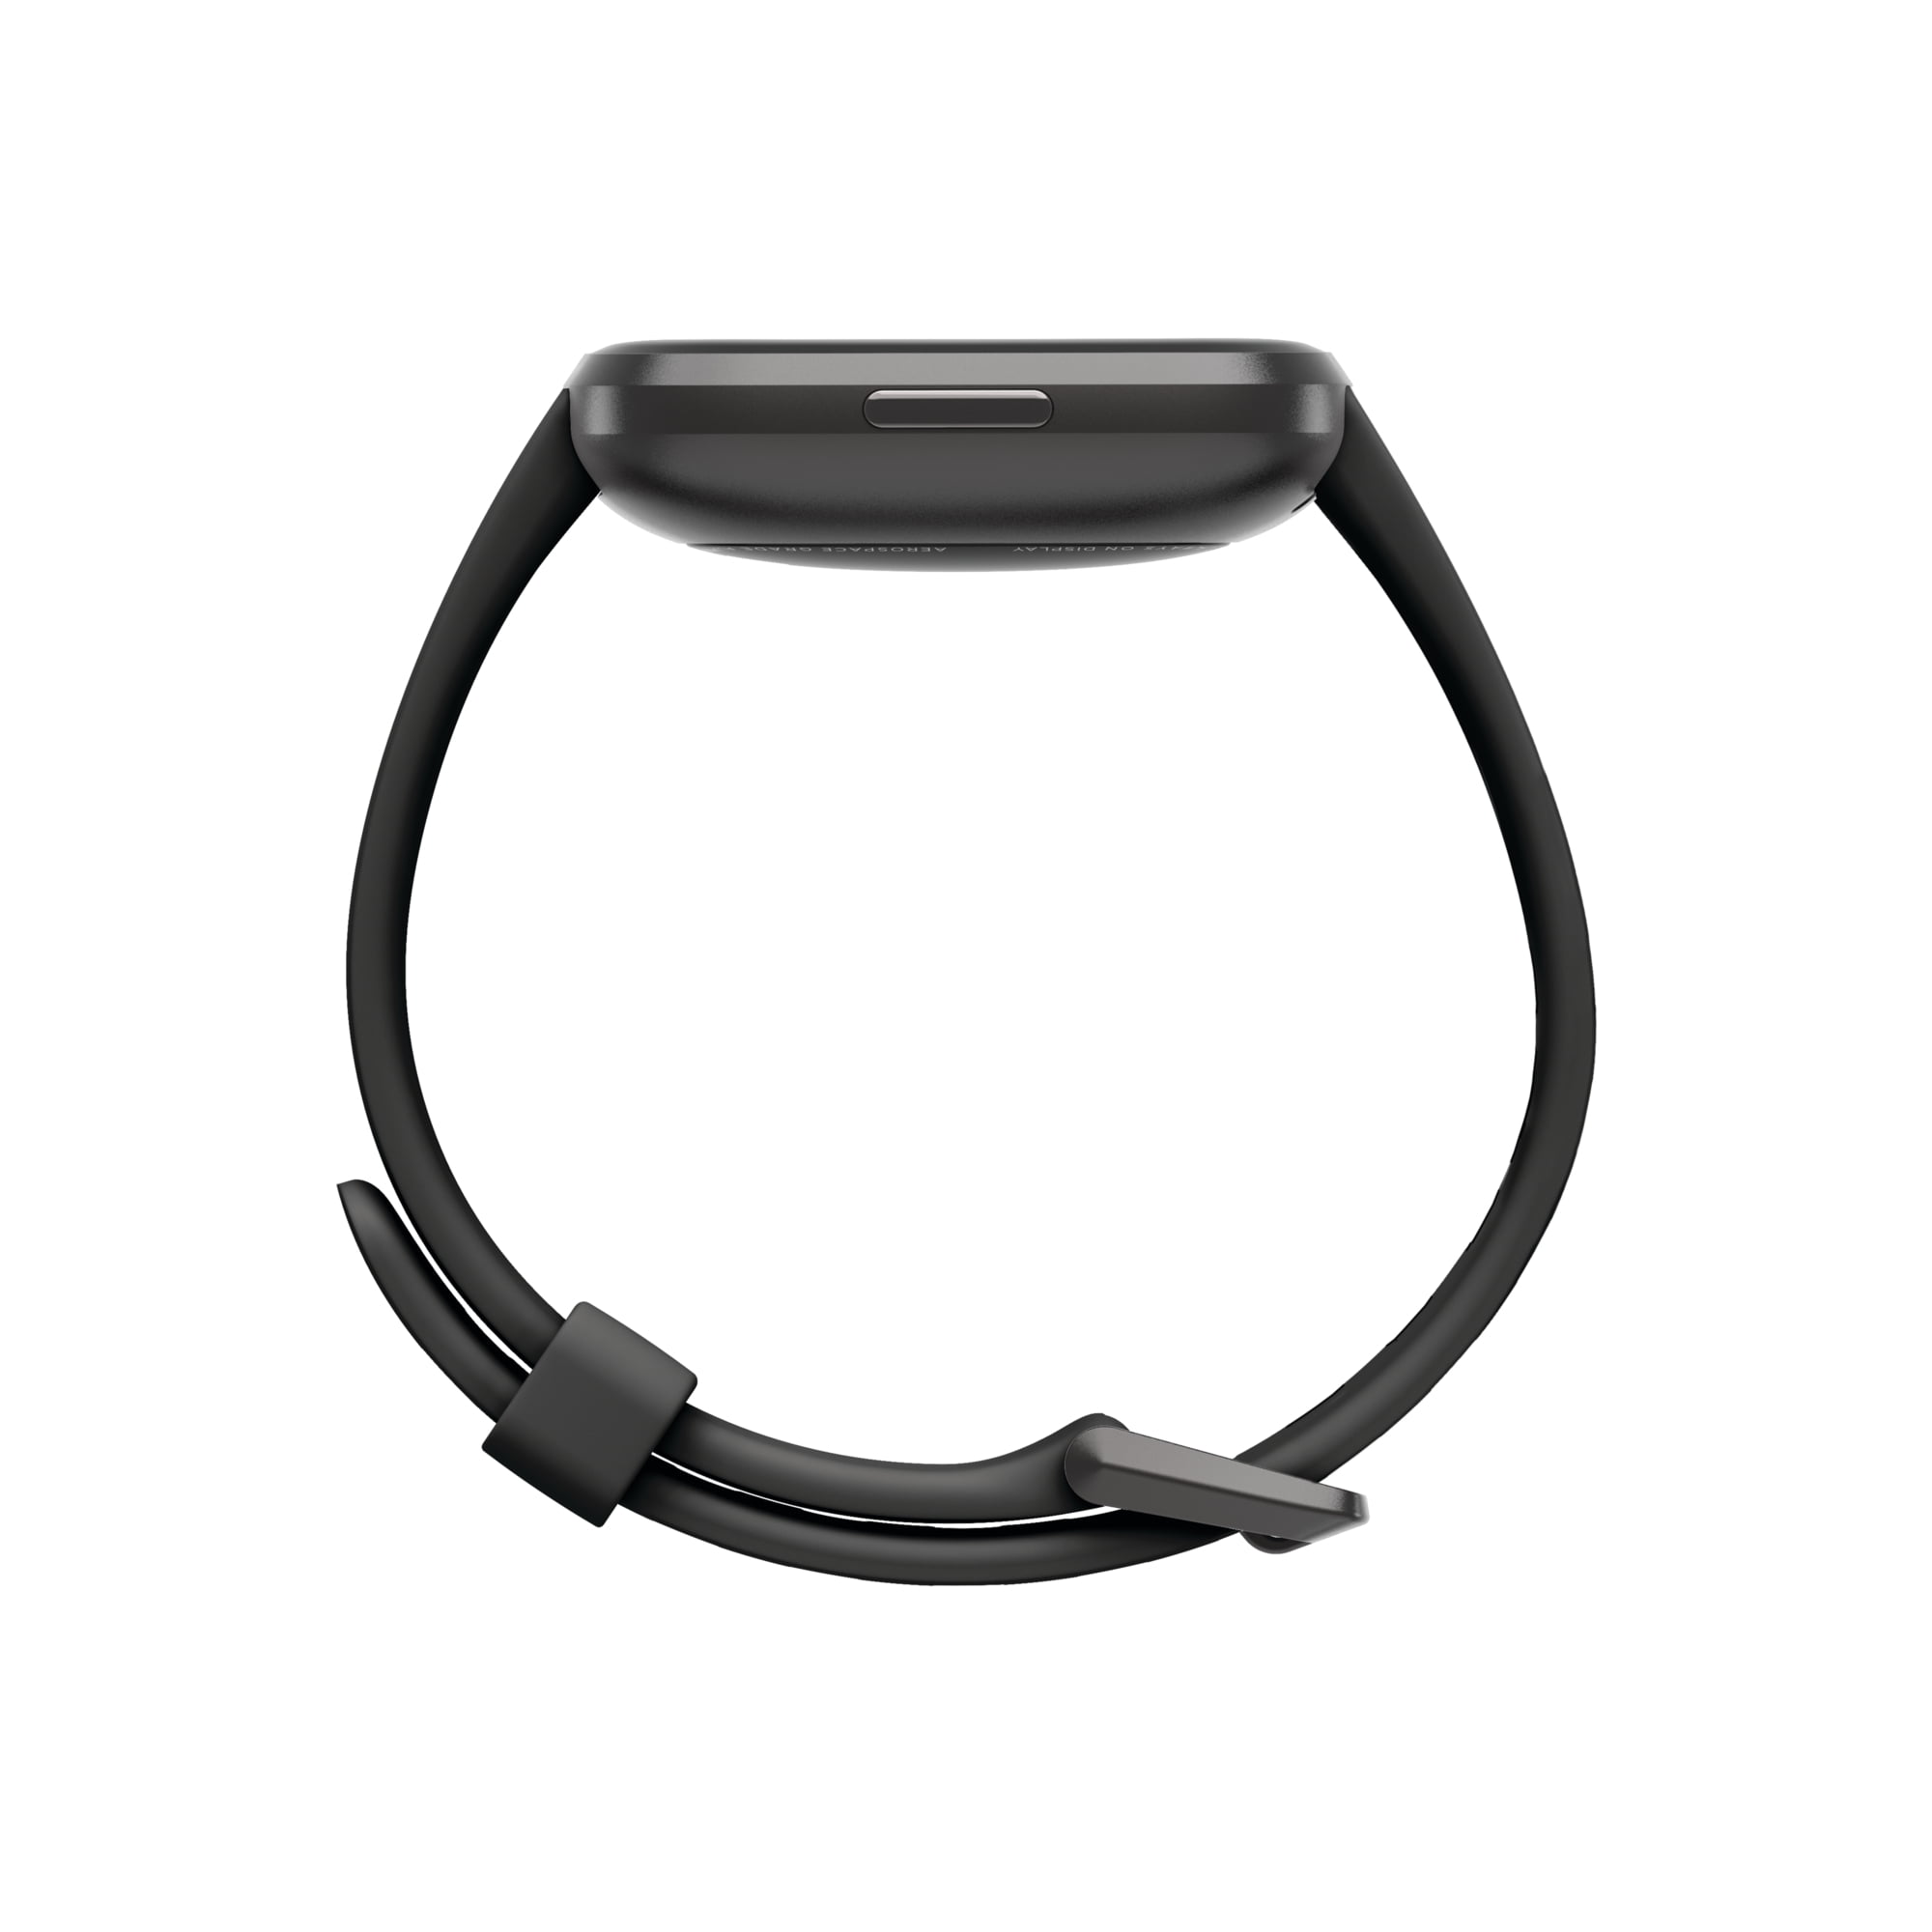 Fitbit Versa 2 Health Fitness Smartwatch - Black/Carbon Aluminum - Walmart.com